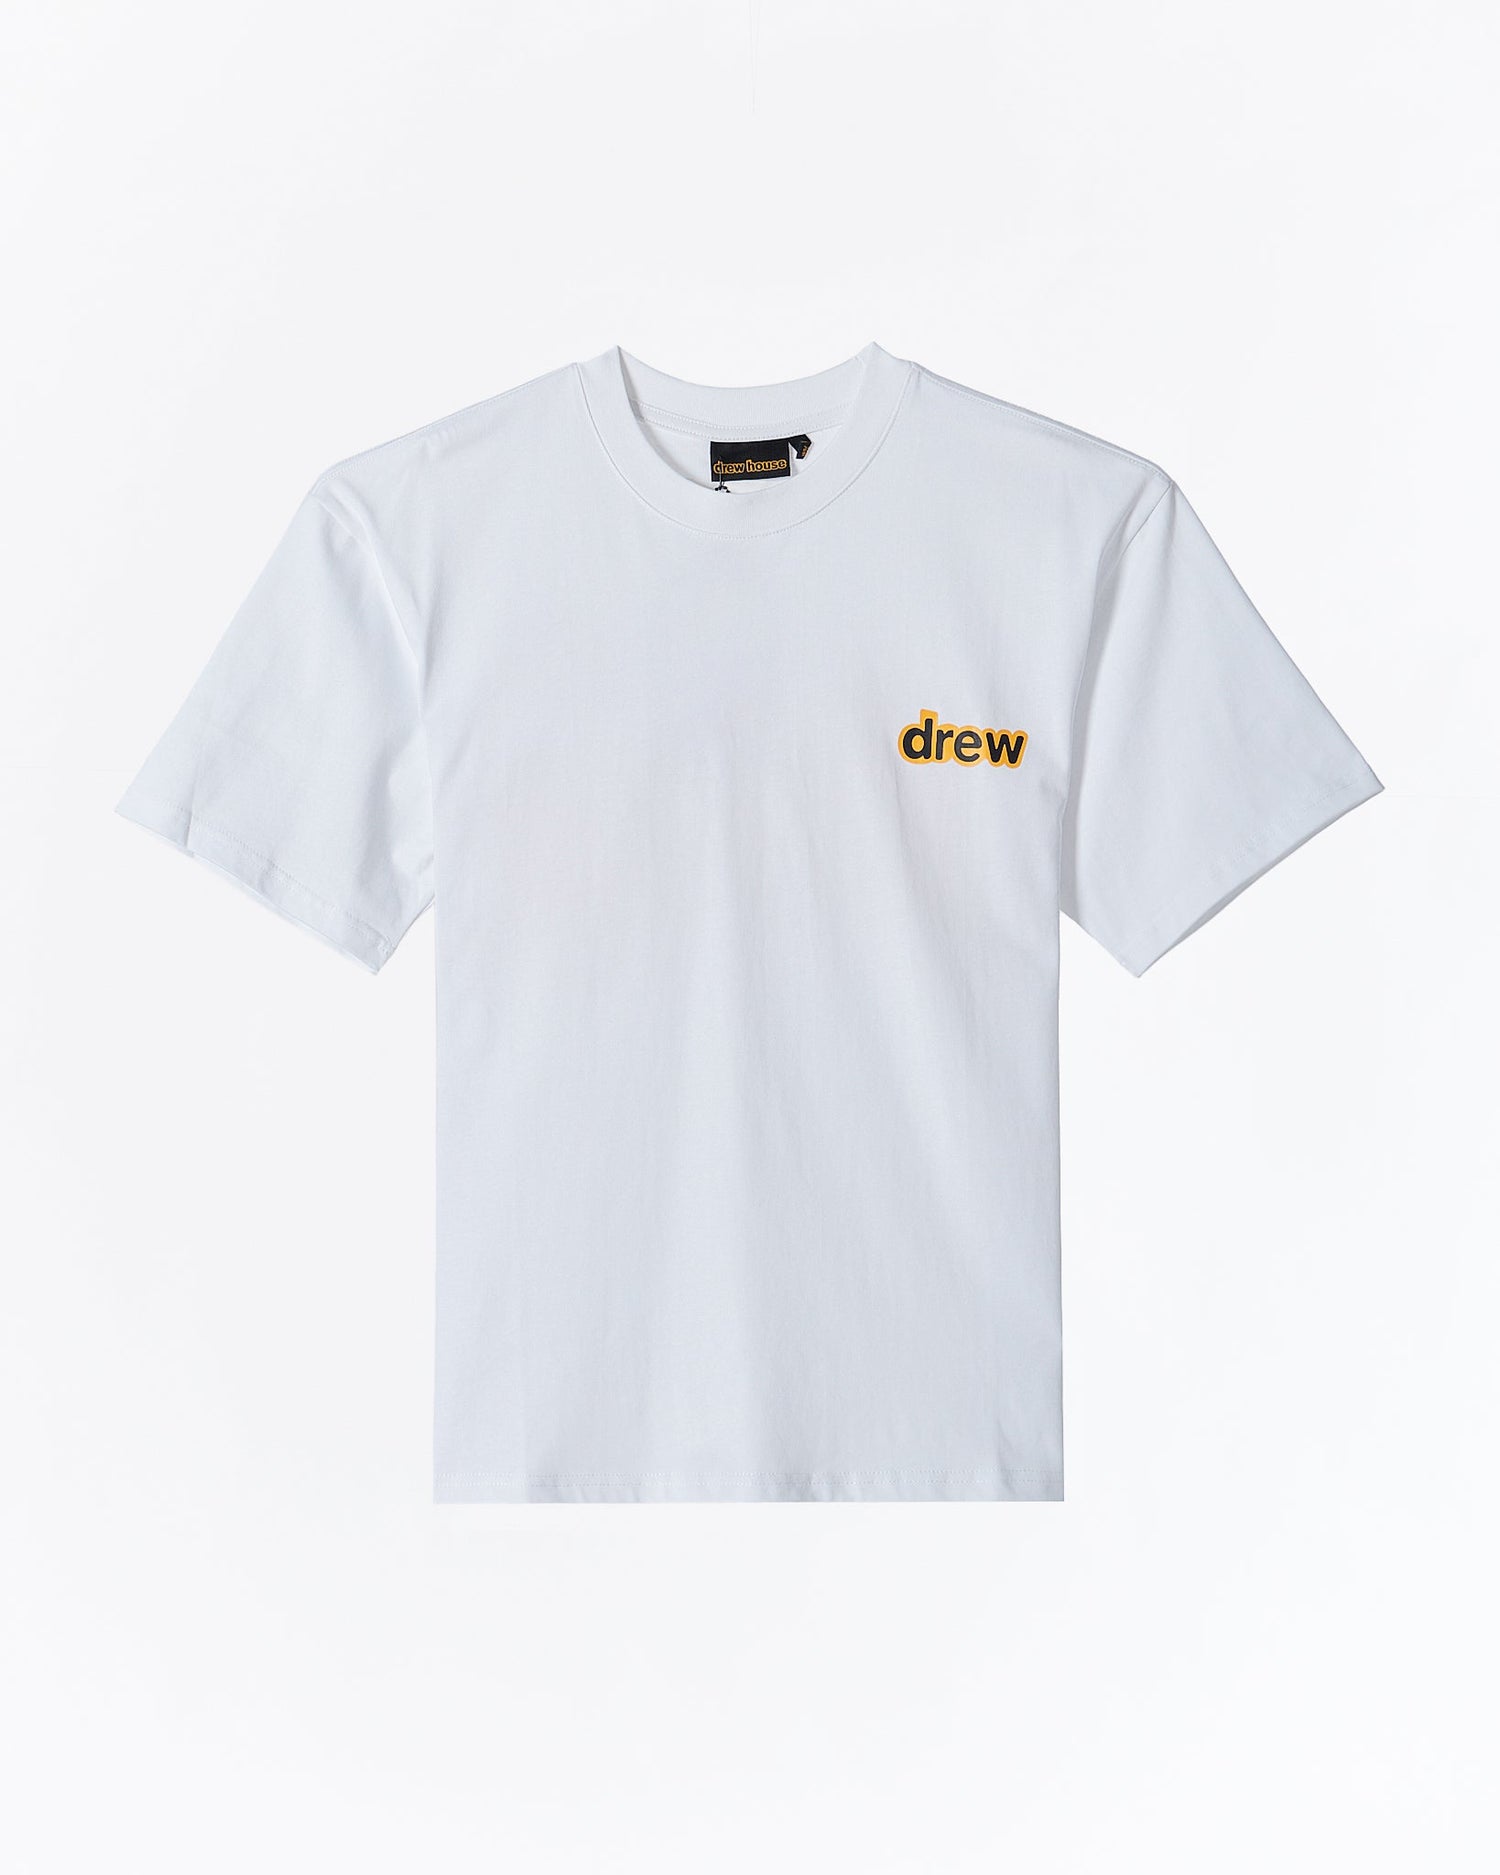 MOI OUTFIT-DRE Teddy Bear Back Unisex White T-Shirt 19.90